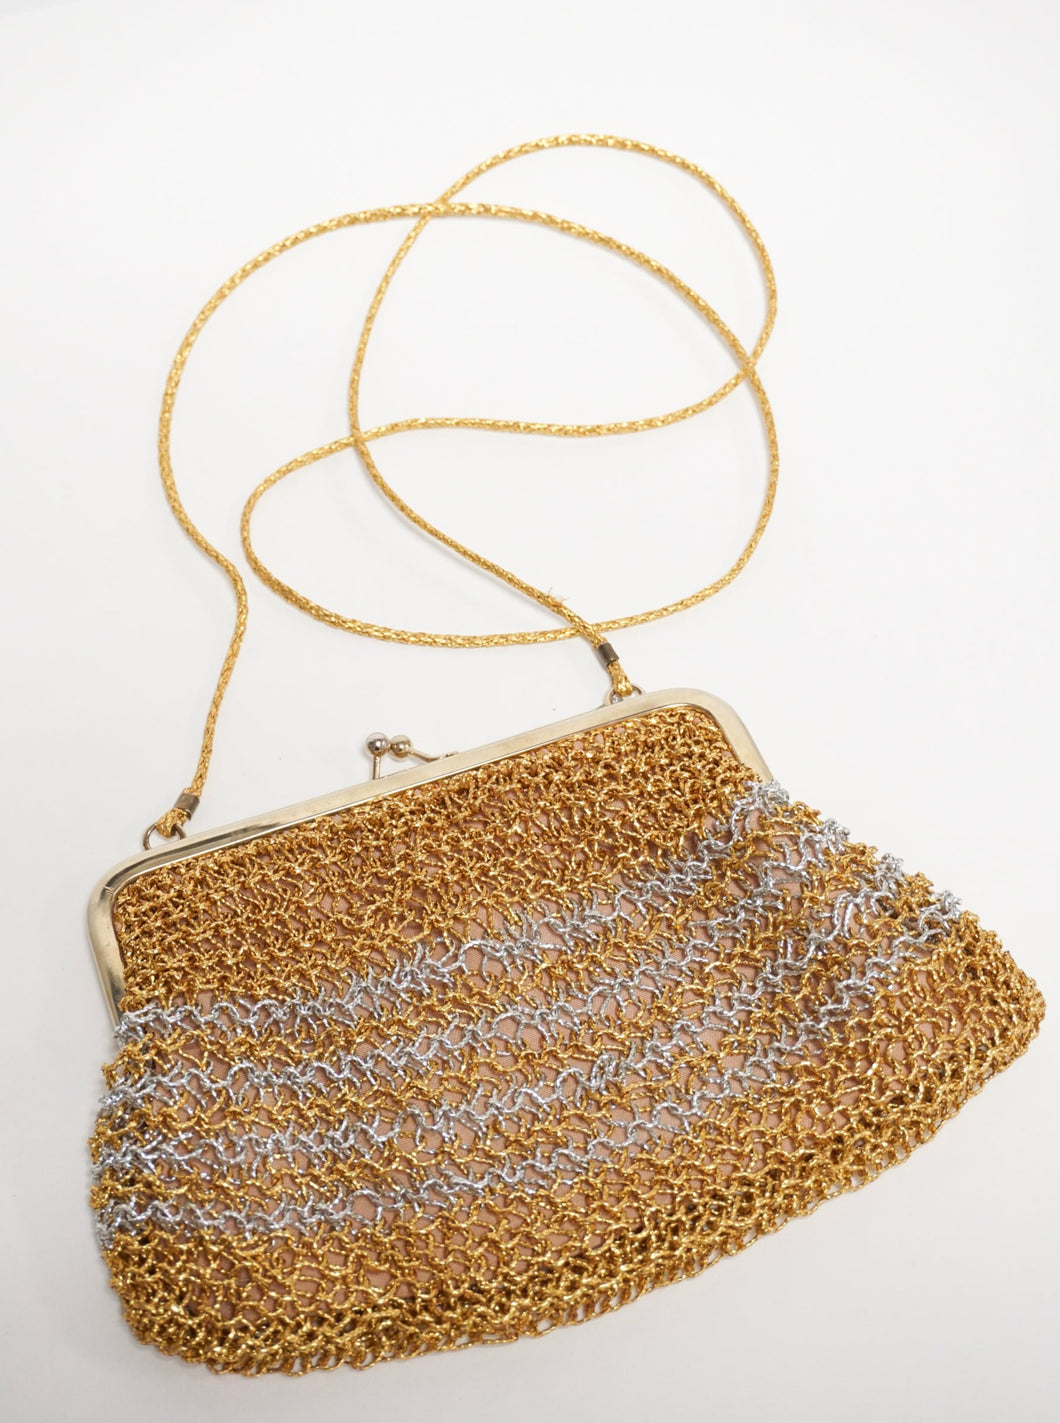 Silver and gold crochet minaudière bag